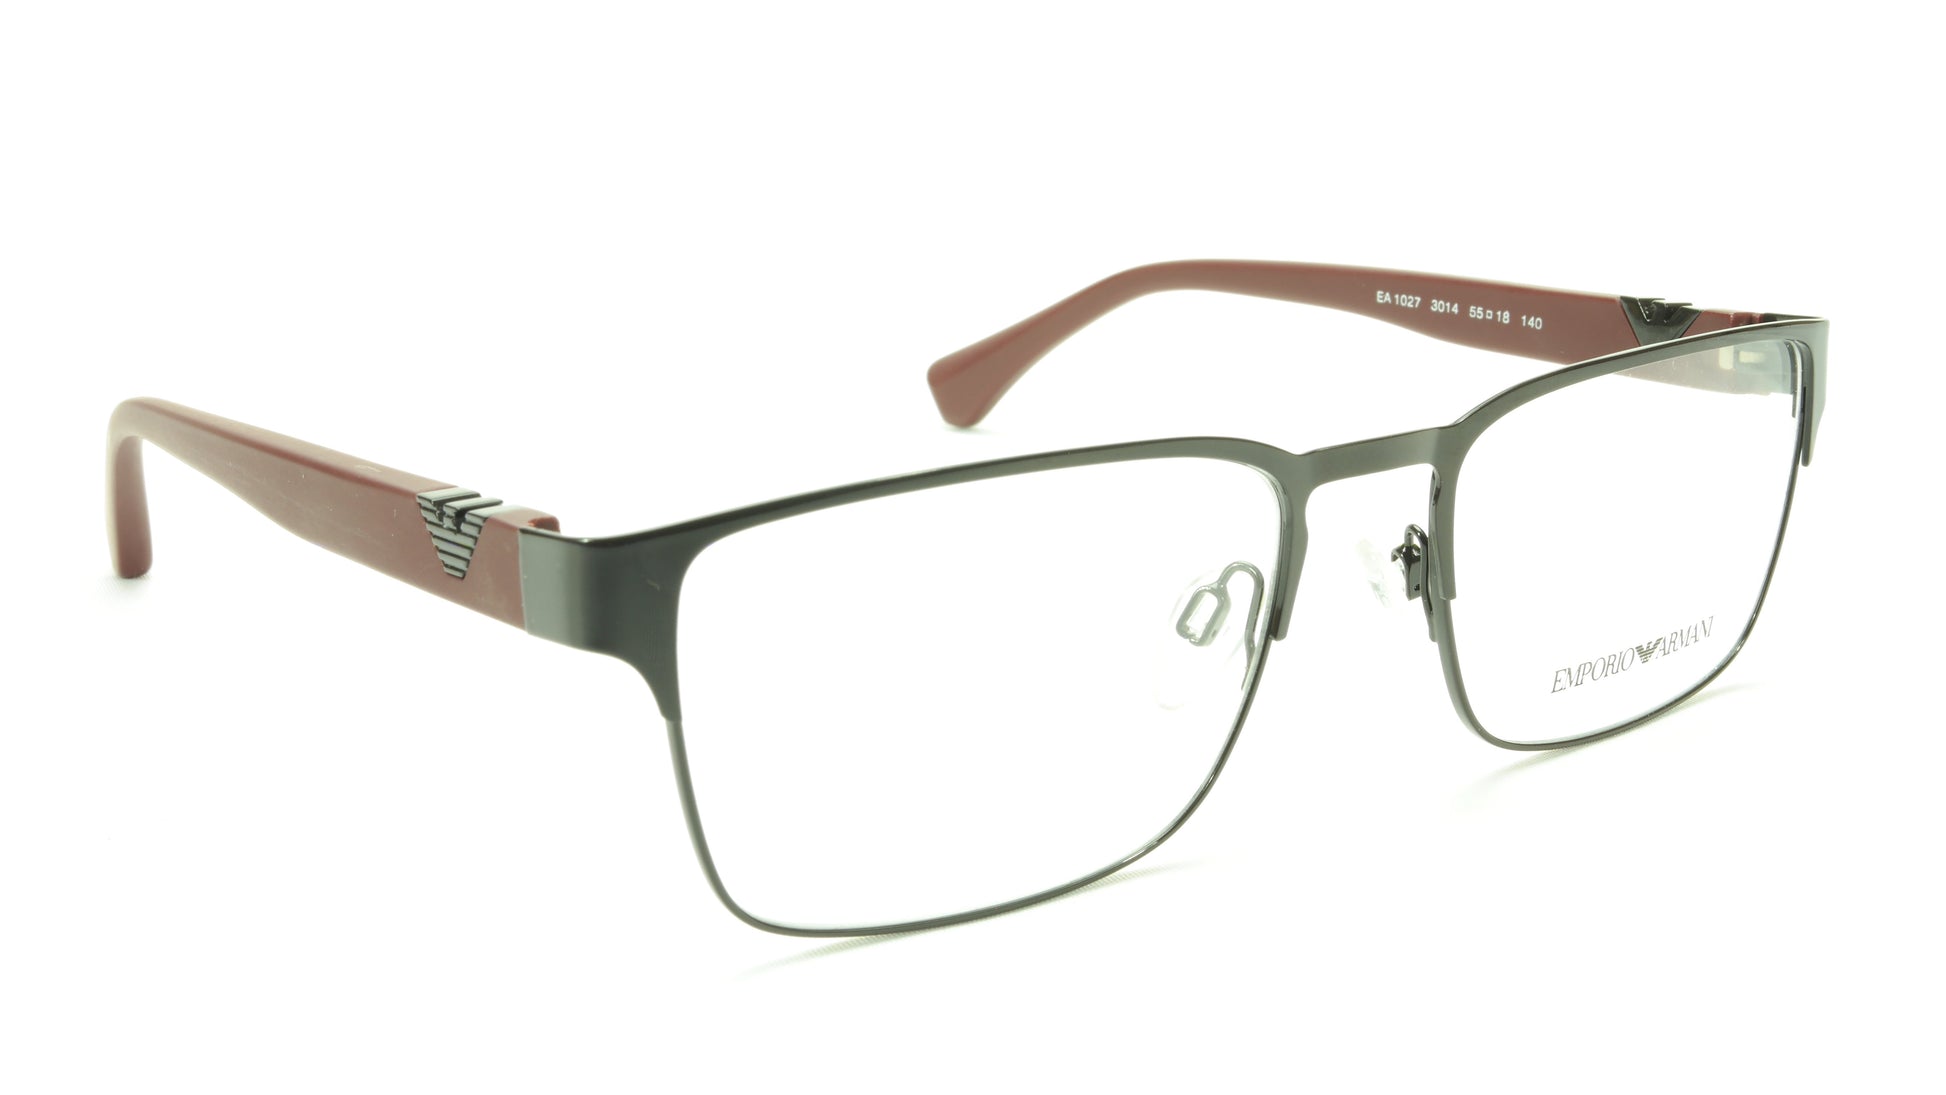 Emporio Armani EA1027 3014 Eyeglasses Frame Acetate Black Dark Red - Frame Bay